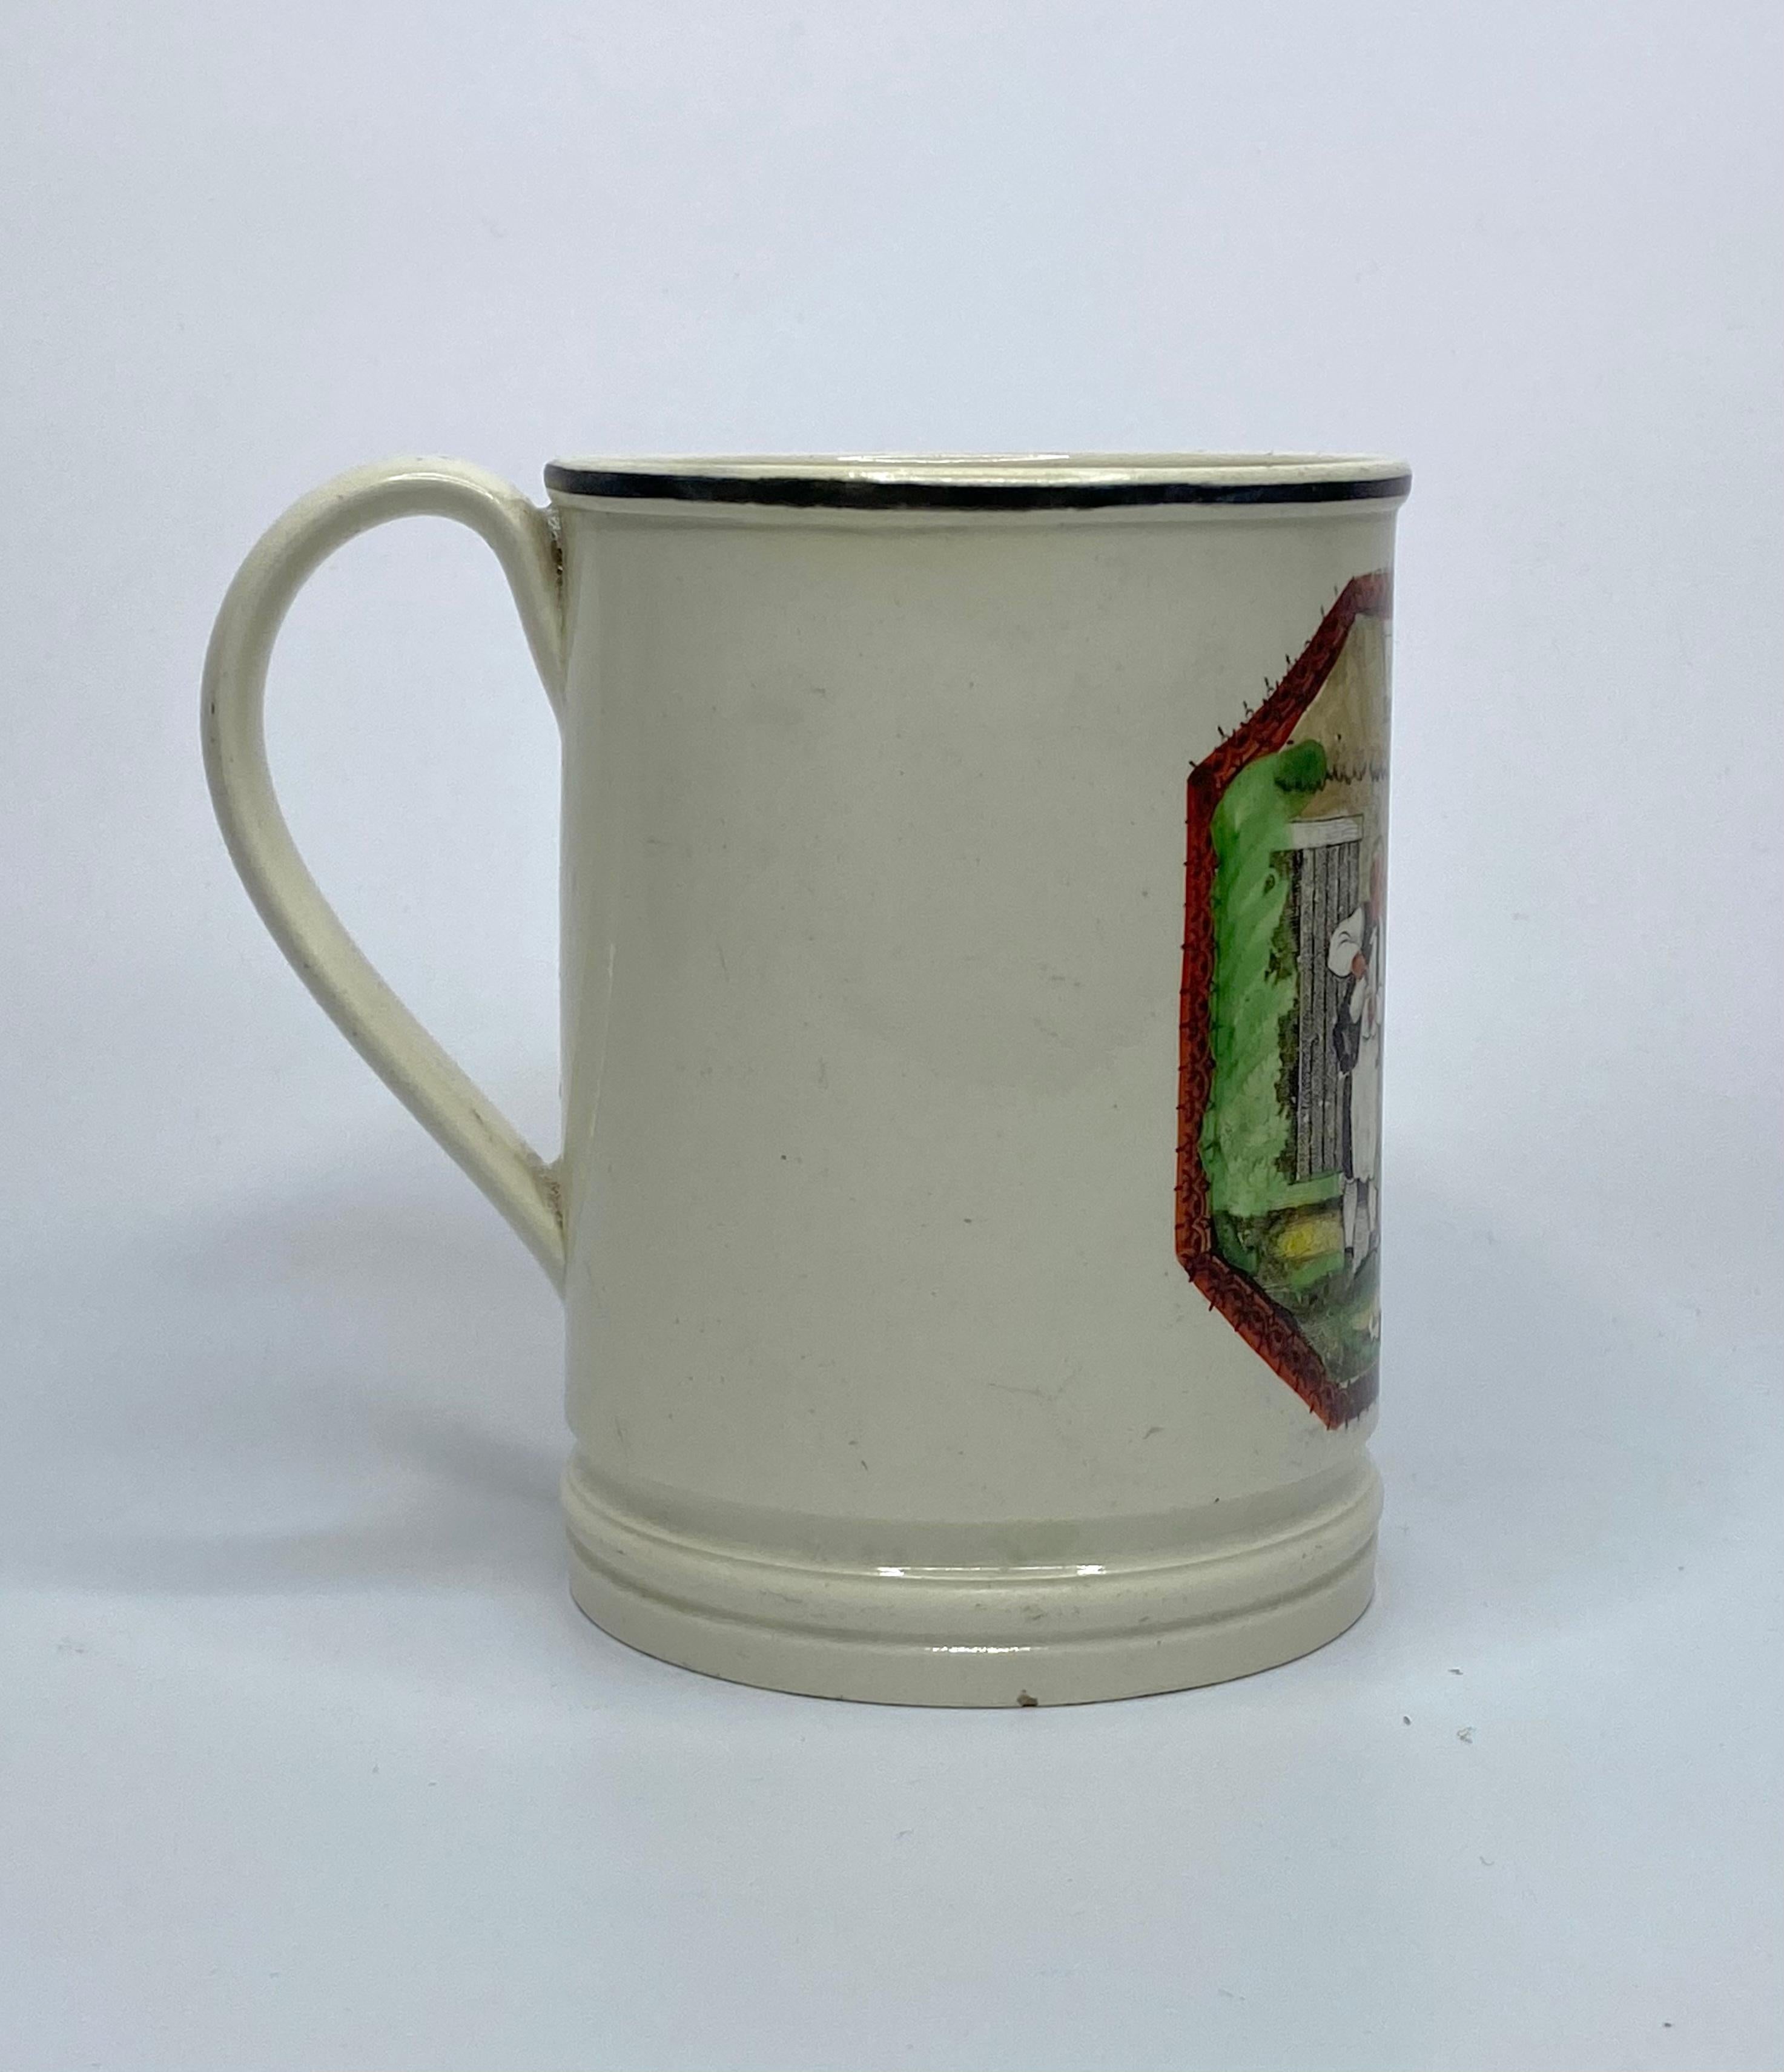 Dixon, Austin & Co, Sunderland pottery creamware Frog mug, 